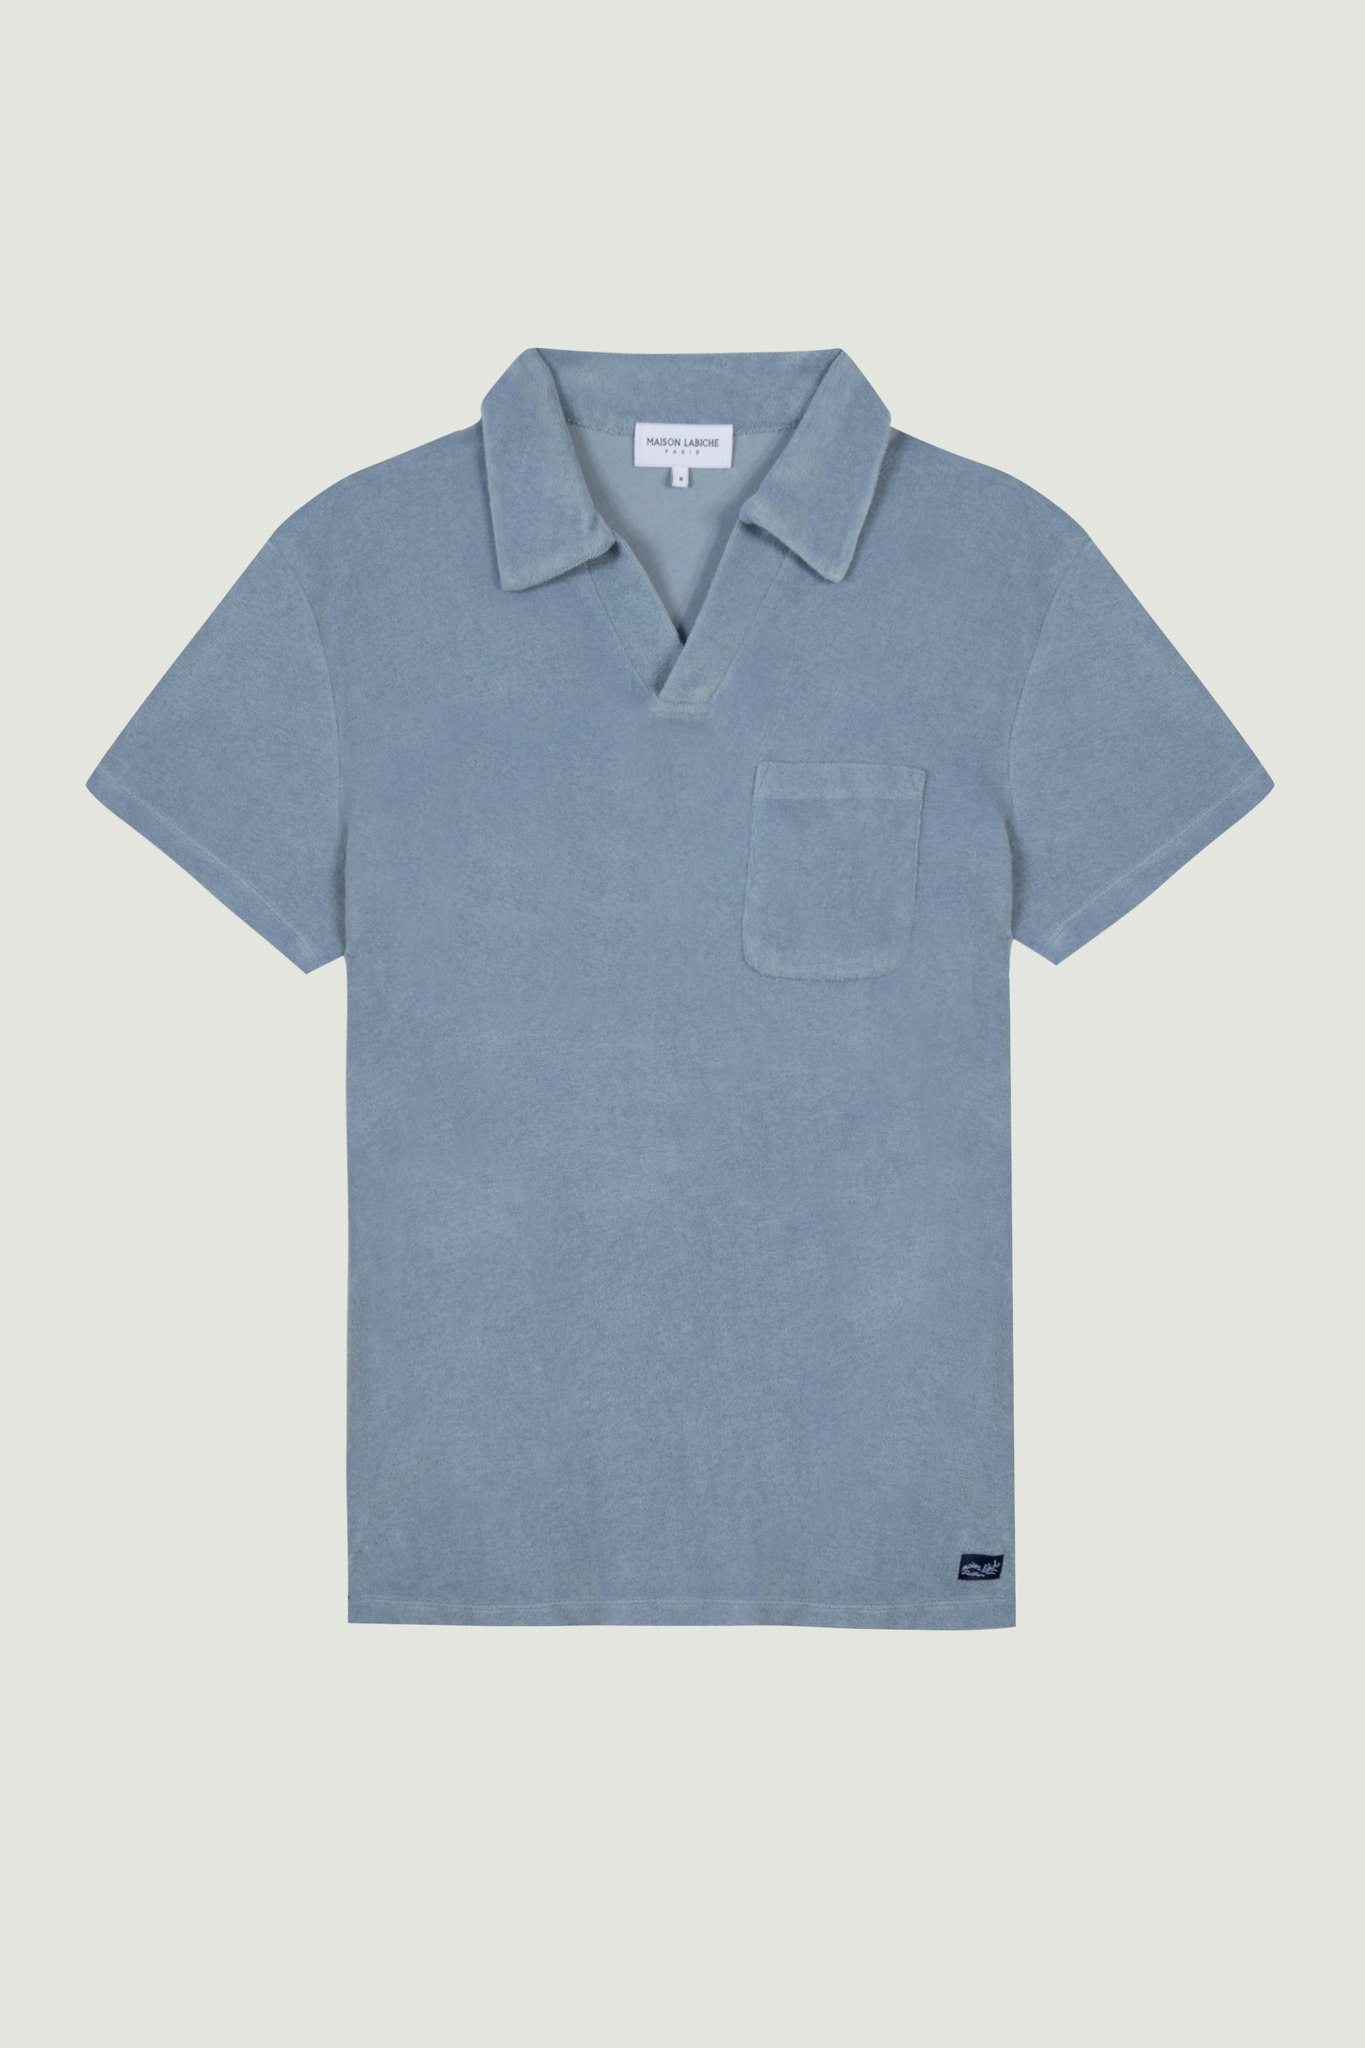 Maison Labiche - Terry Cloth Monclar Polo, Slate Blue